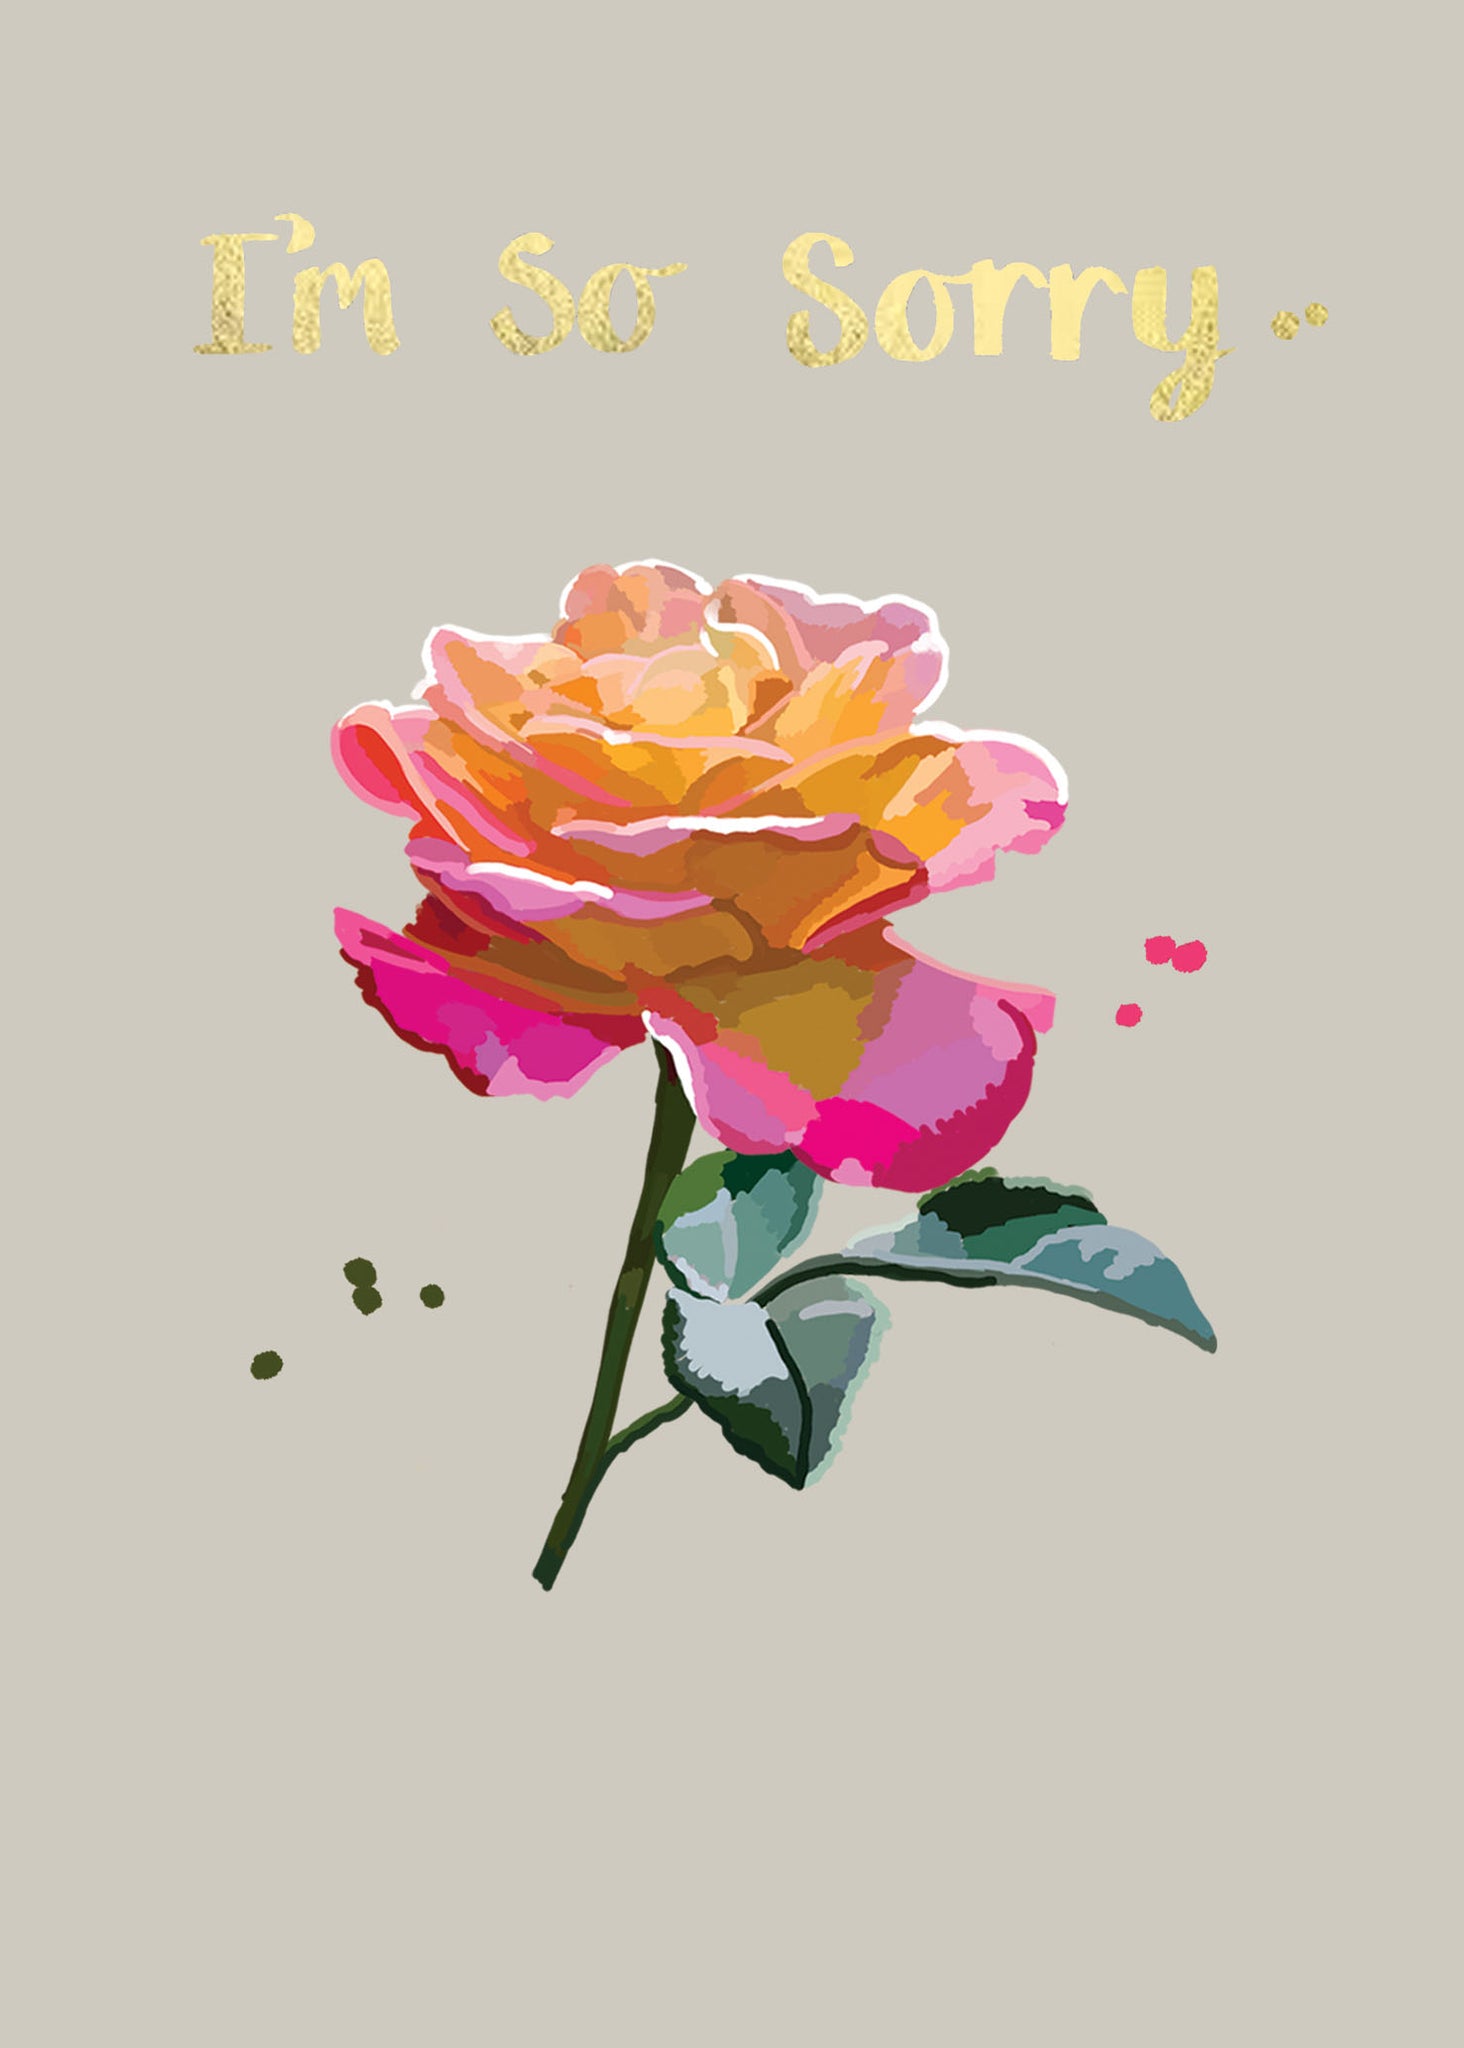 I’m So Sorry